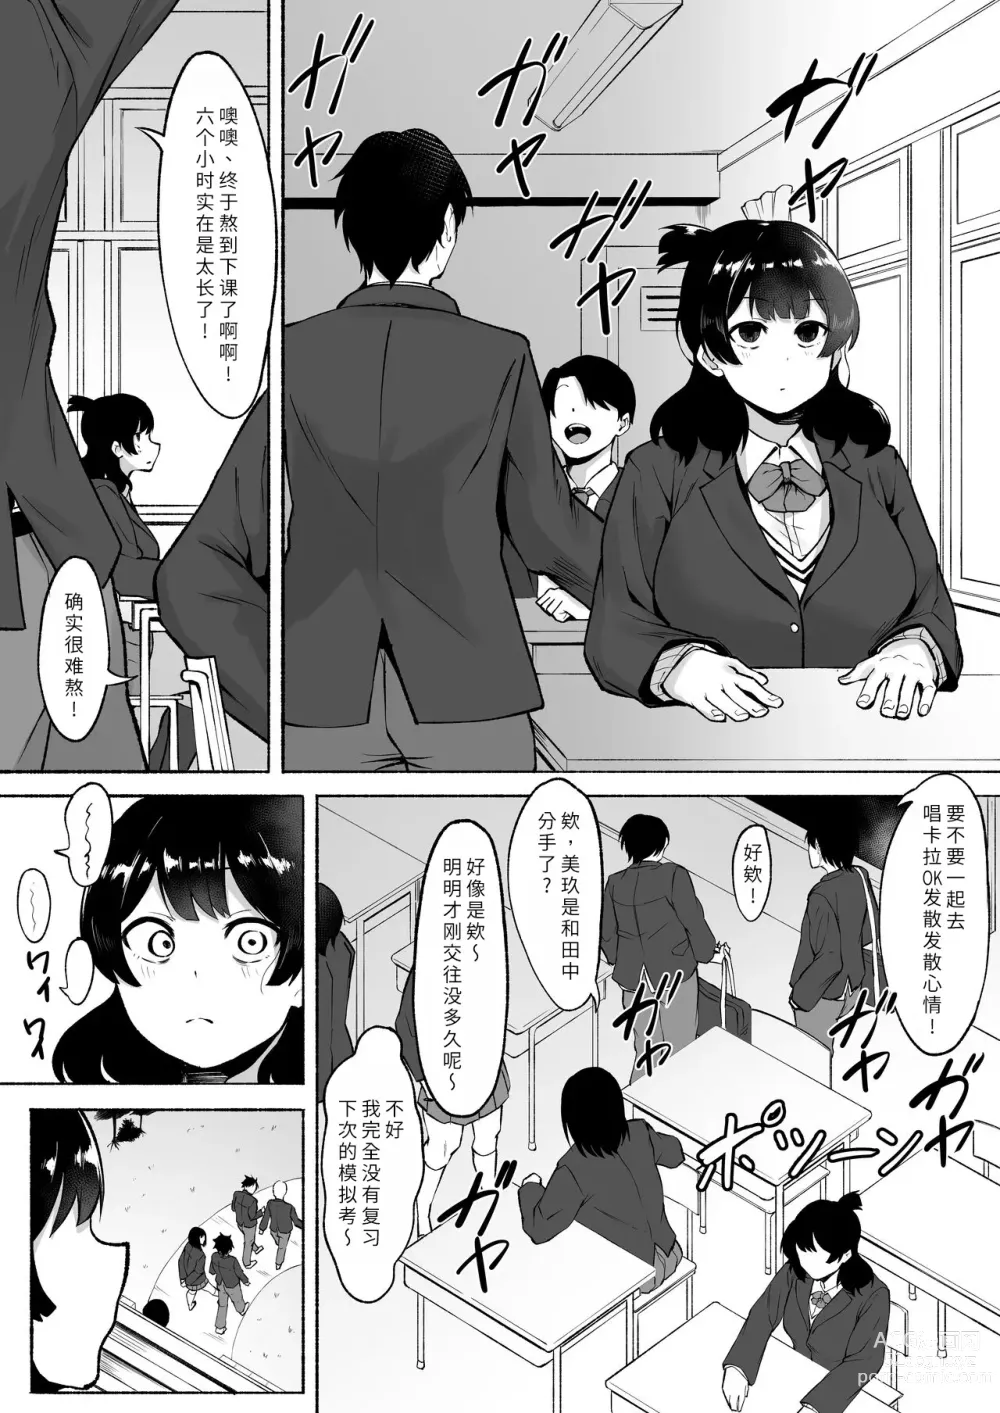 Page 22 of doujinshi 侵犯了一位社恐女生后便成为对方的炮友的故事w 2